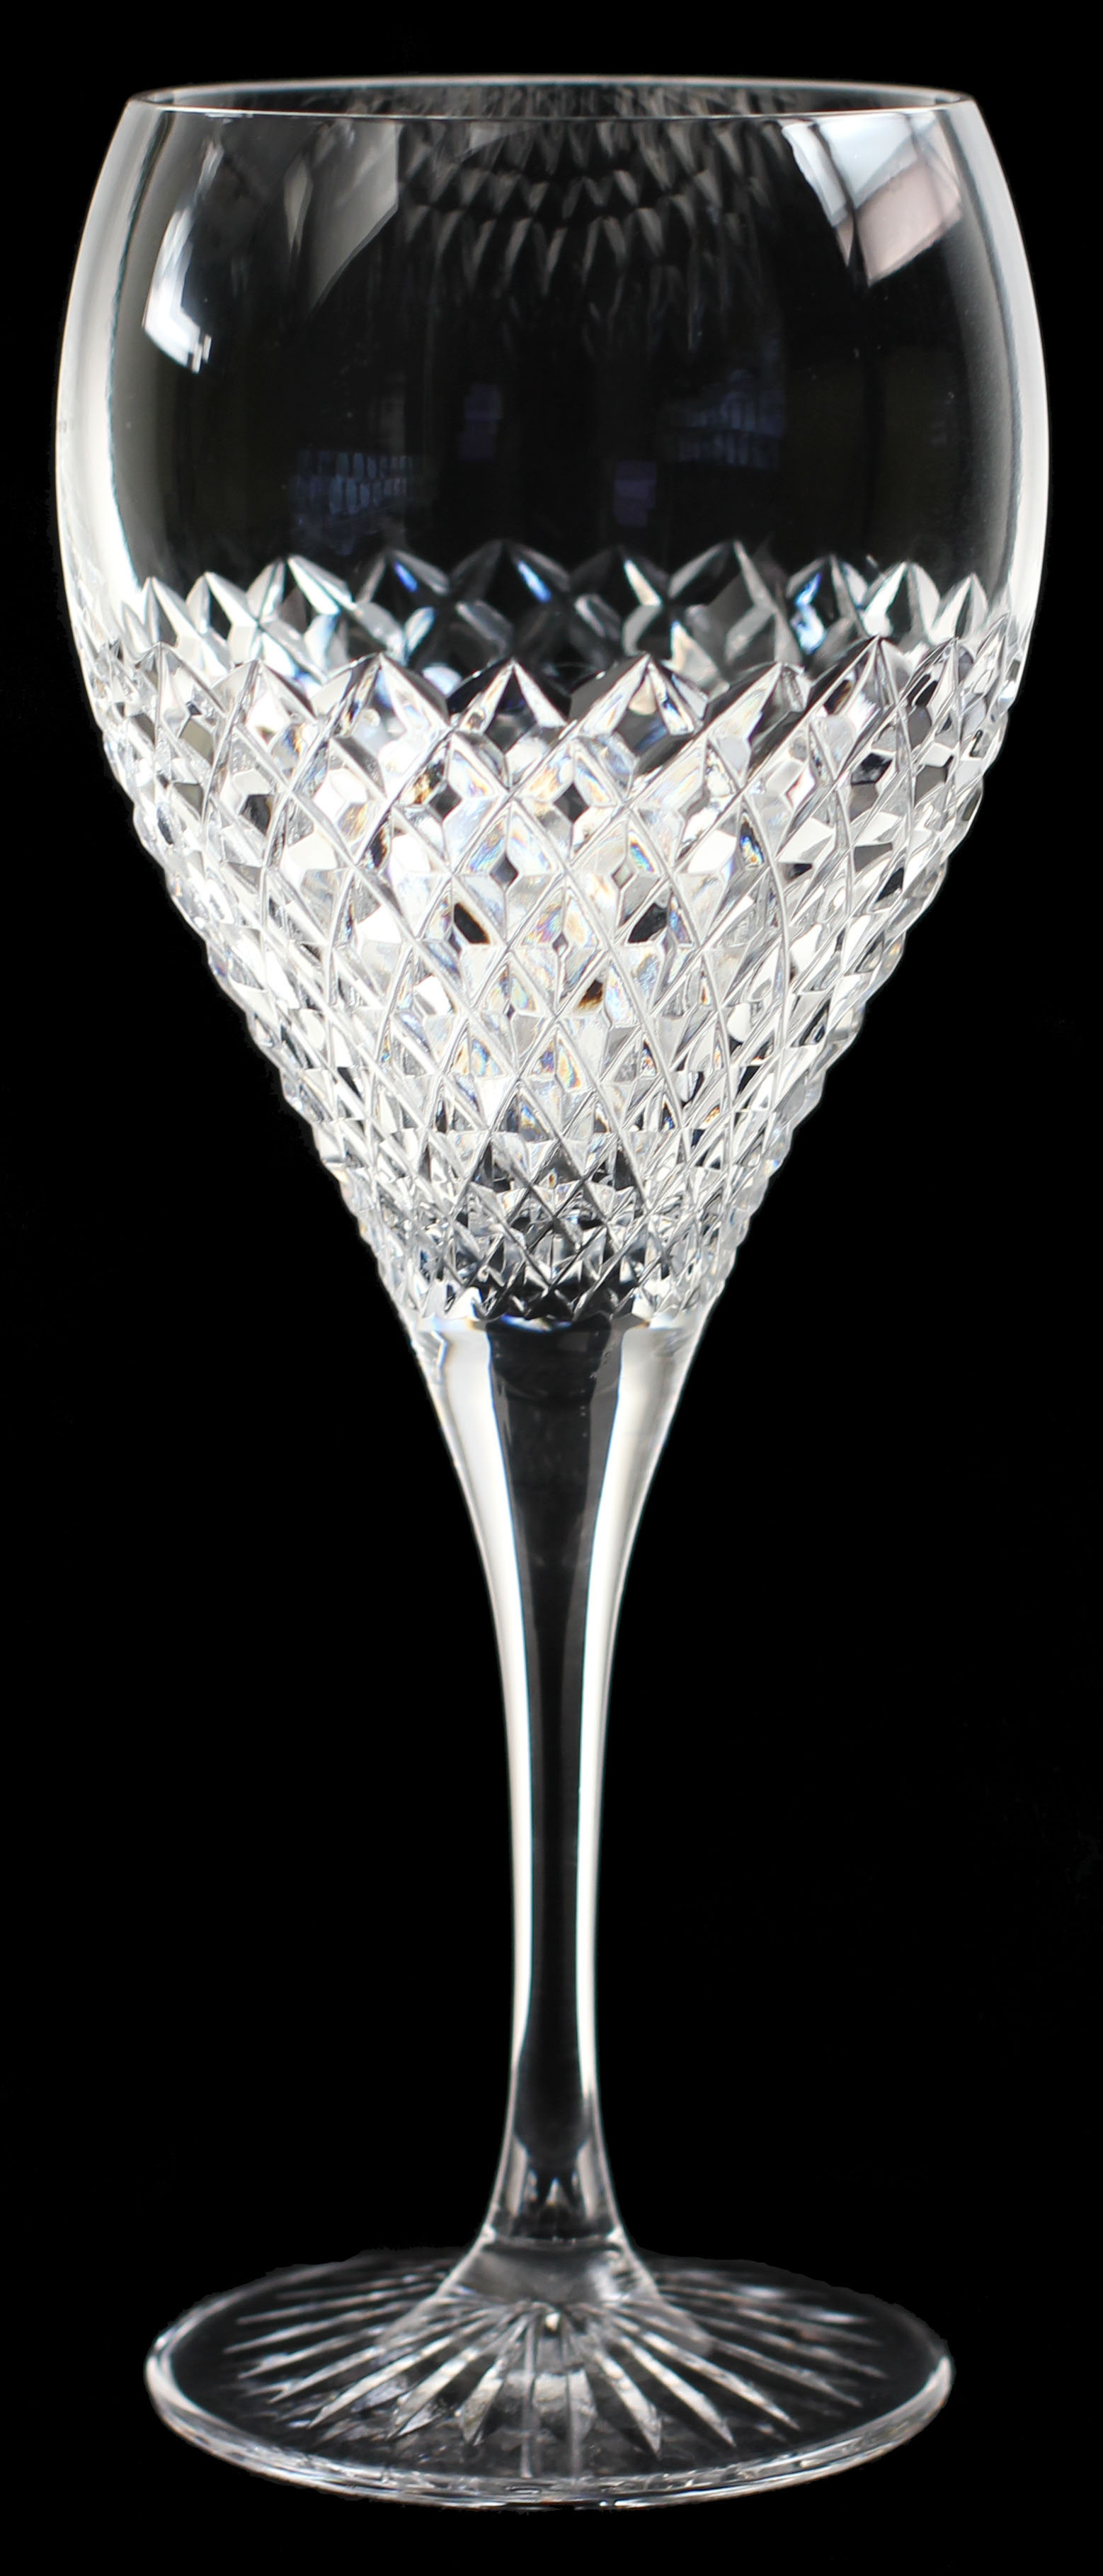 Handmade full lead crystal wine glasses/goblet in our Ice Diamond design